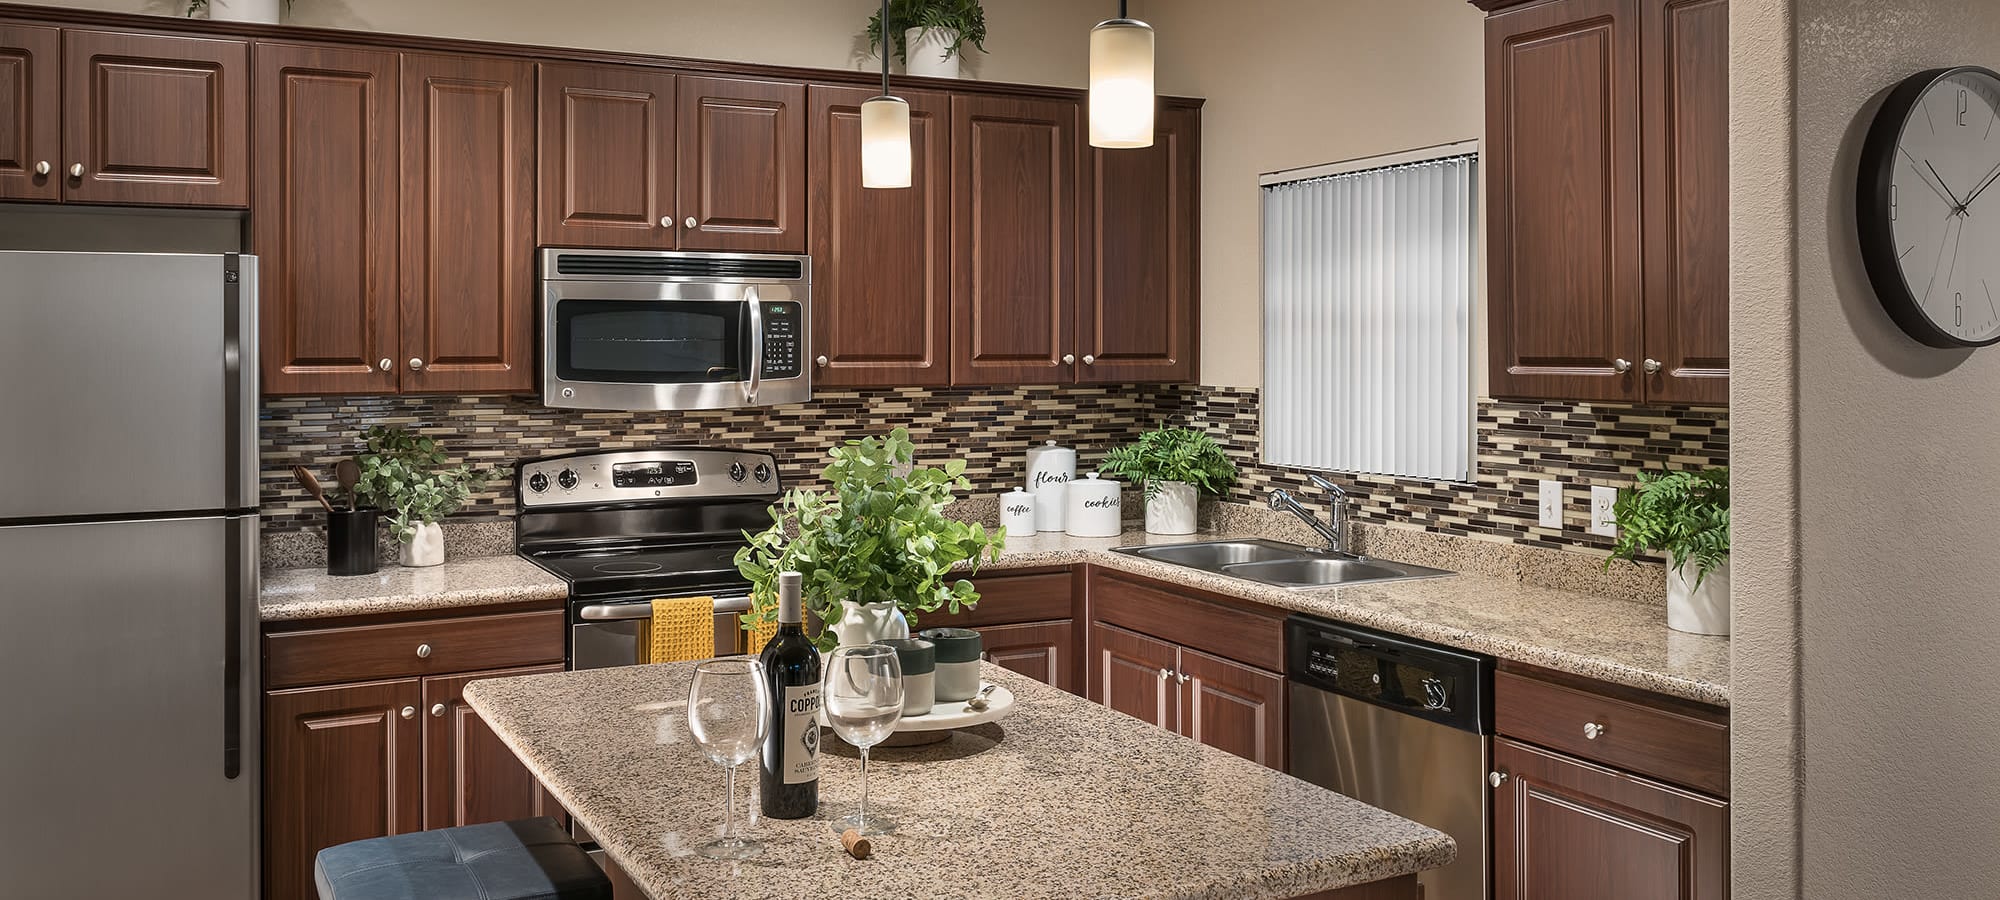 Luxury kitchen with stainless steel appliances at San Norterra in Phoenix, Arizona